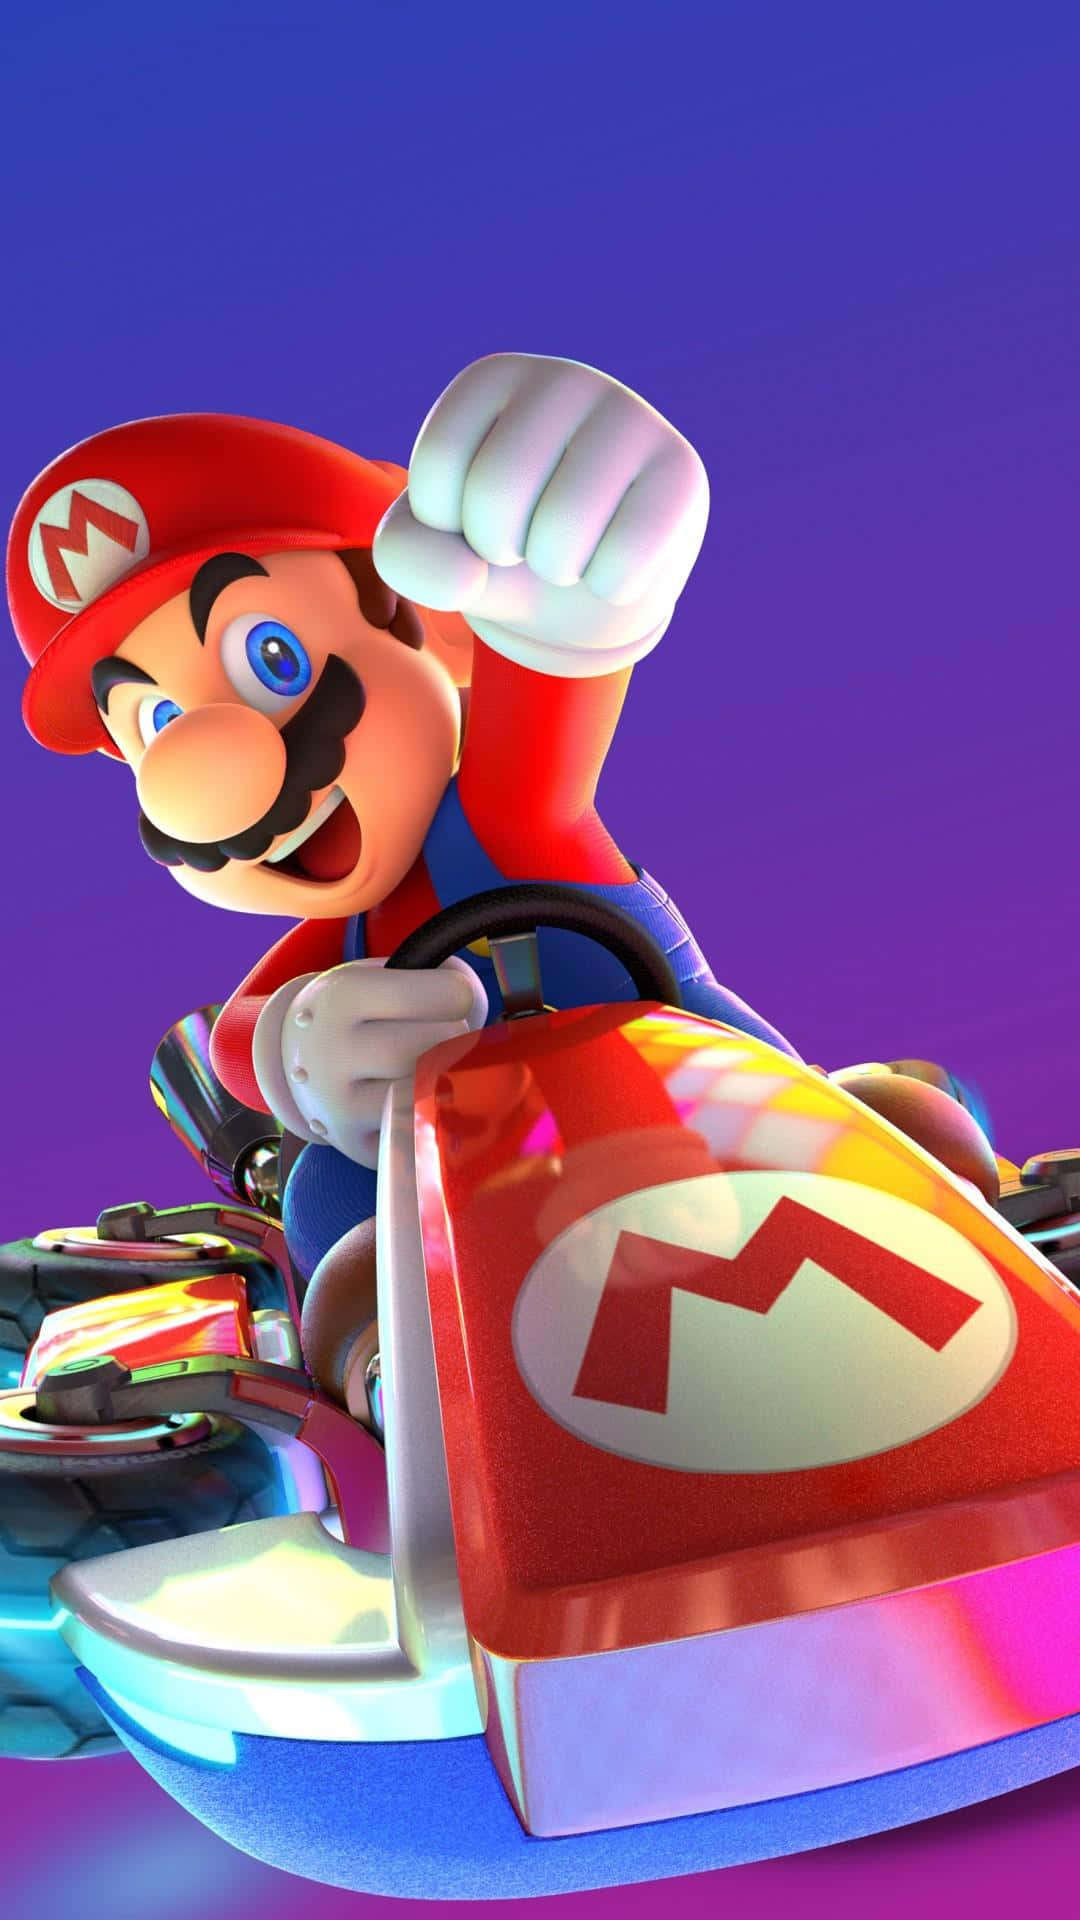 The Iconic Mario Of Super Mario Bros. Fame